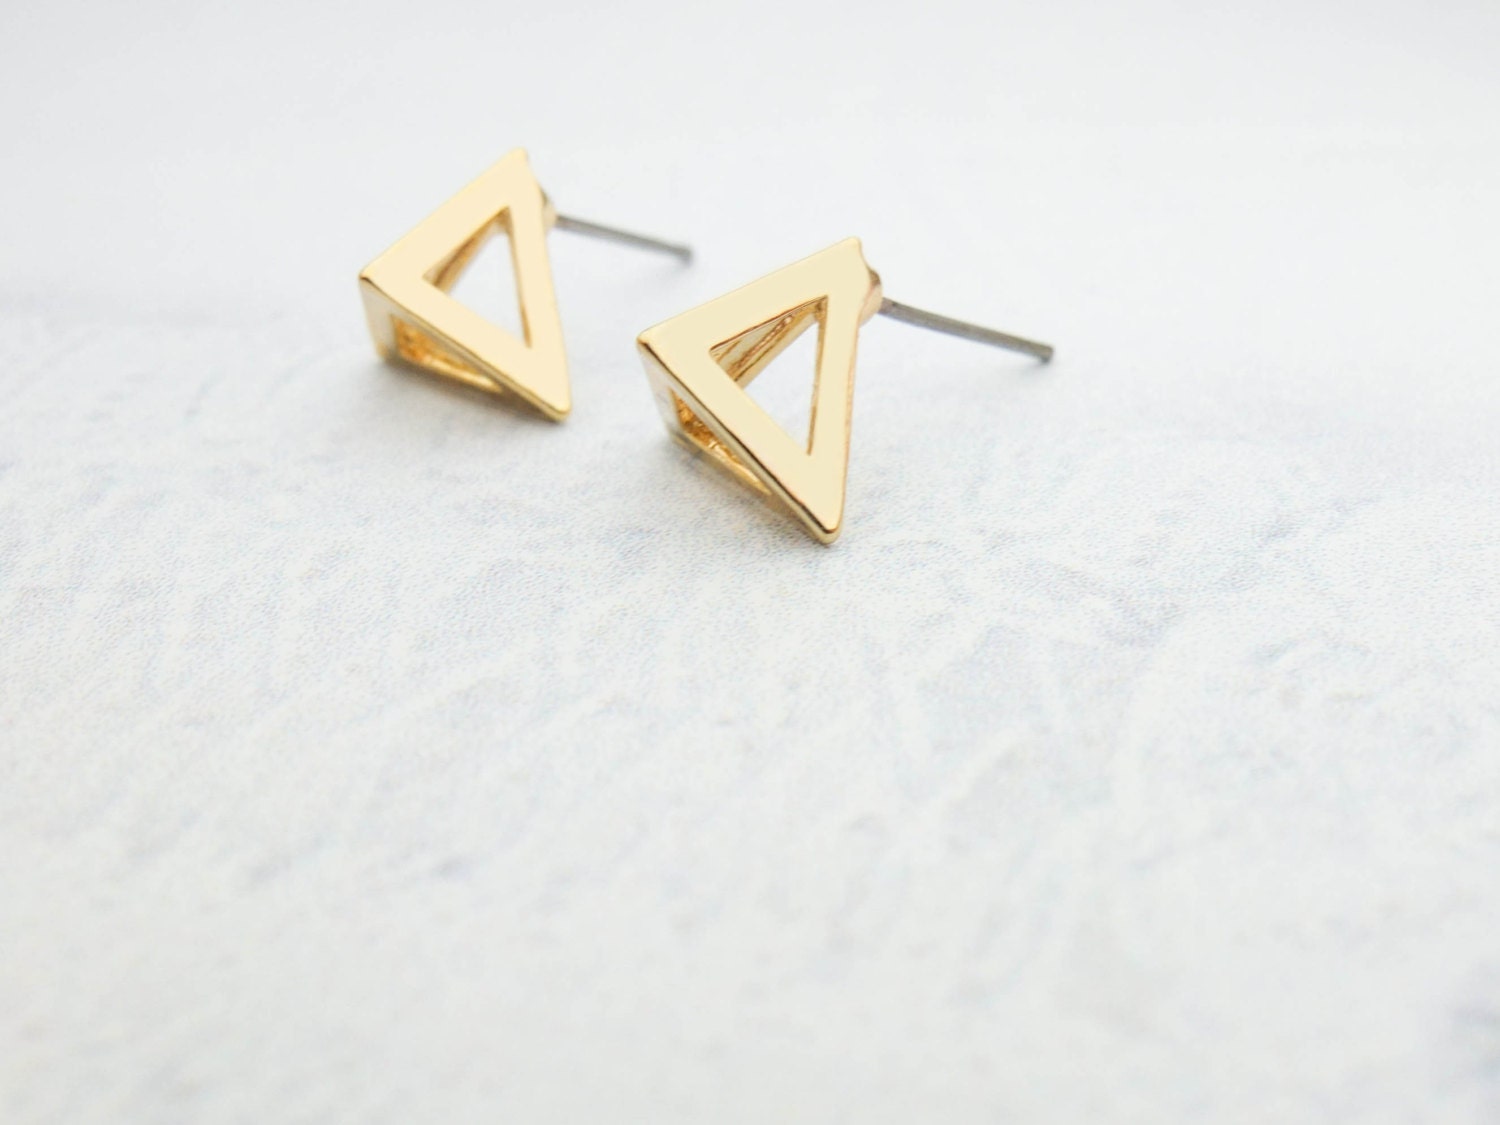 Gold Triangle Earrings Gold stud earrings by SeablueBoutique